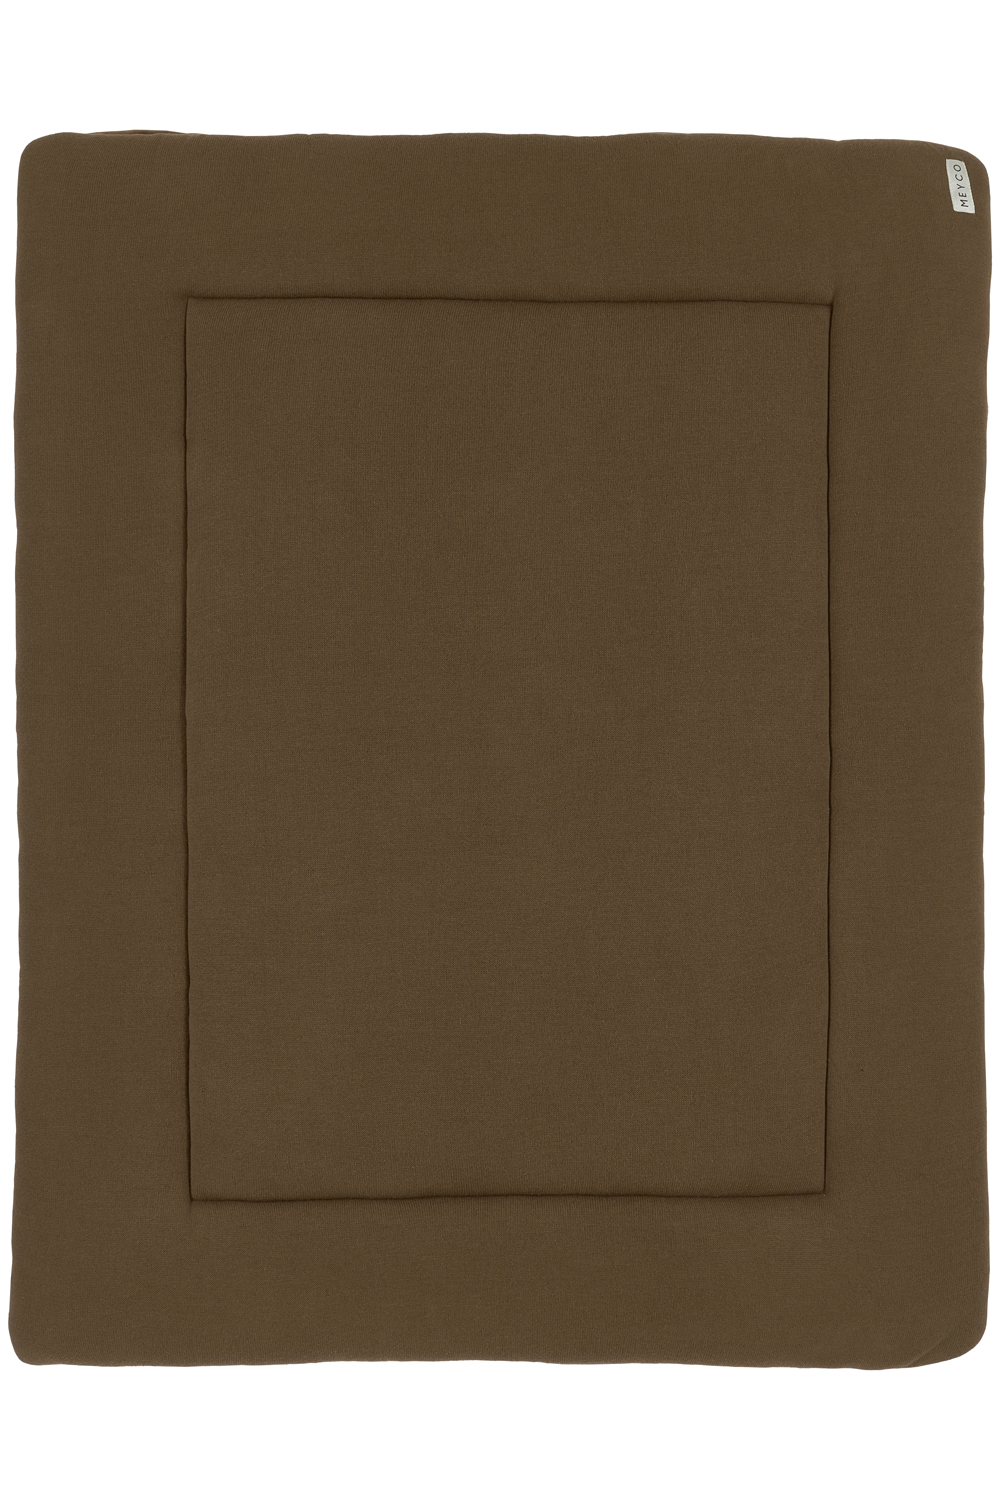 Laufgittereinlage Knit Basic velvet - chocolate - 77x97cm